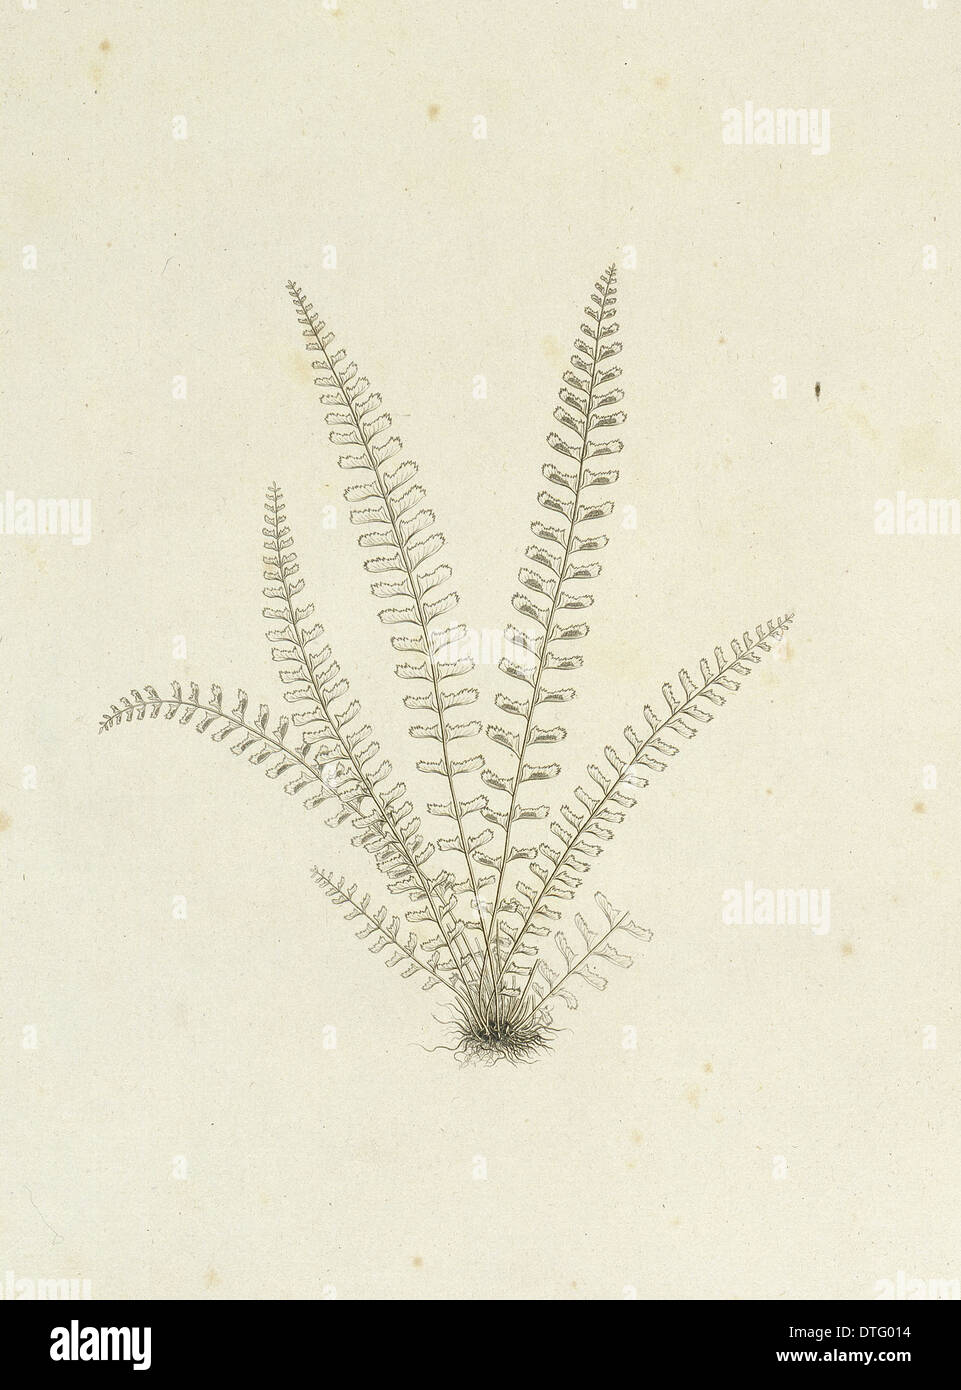 Asplenium monanthes, single-sorus spleenwort Stock Photo